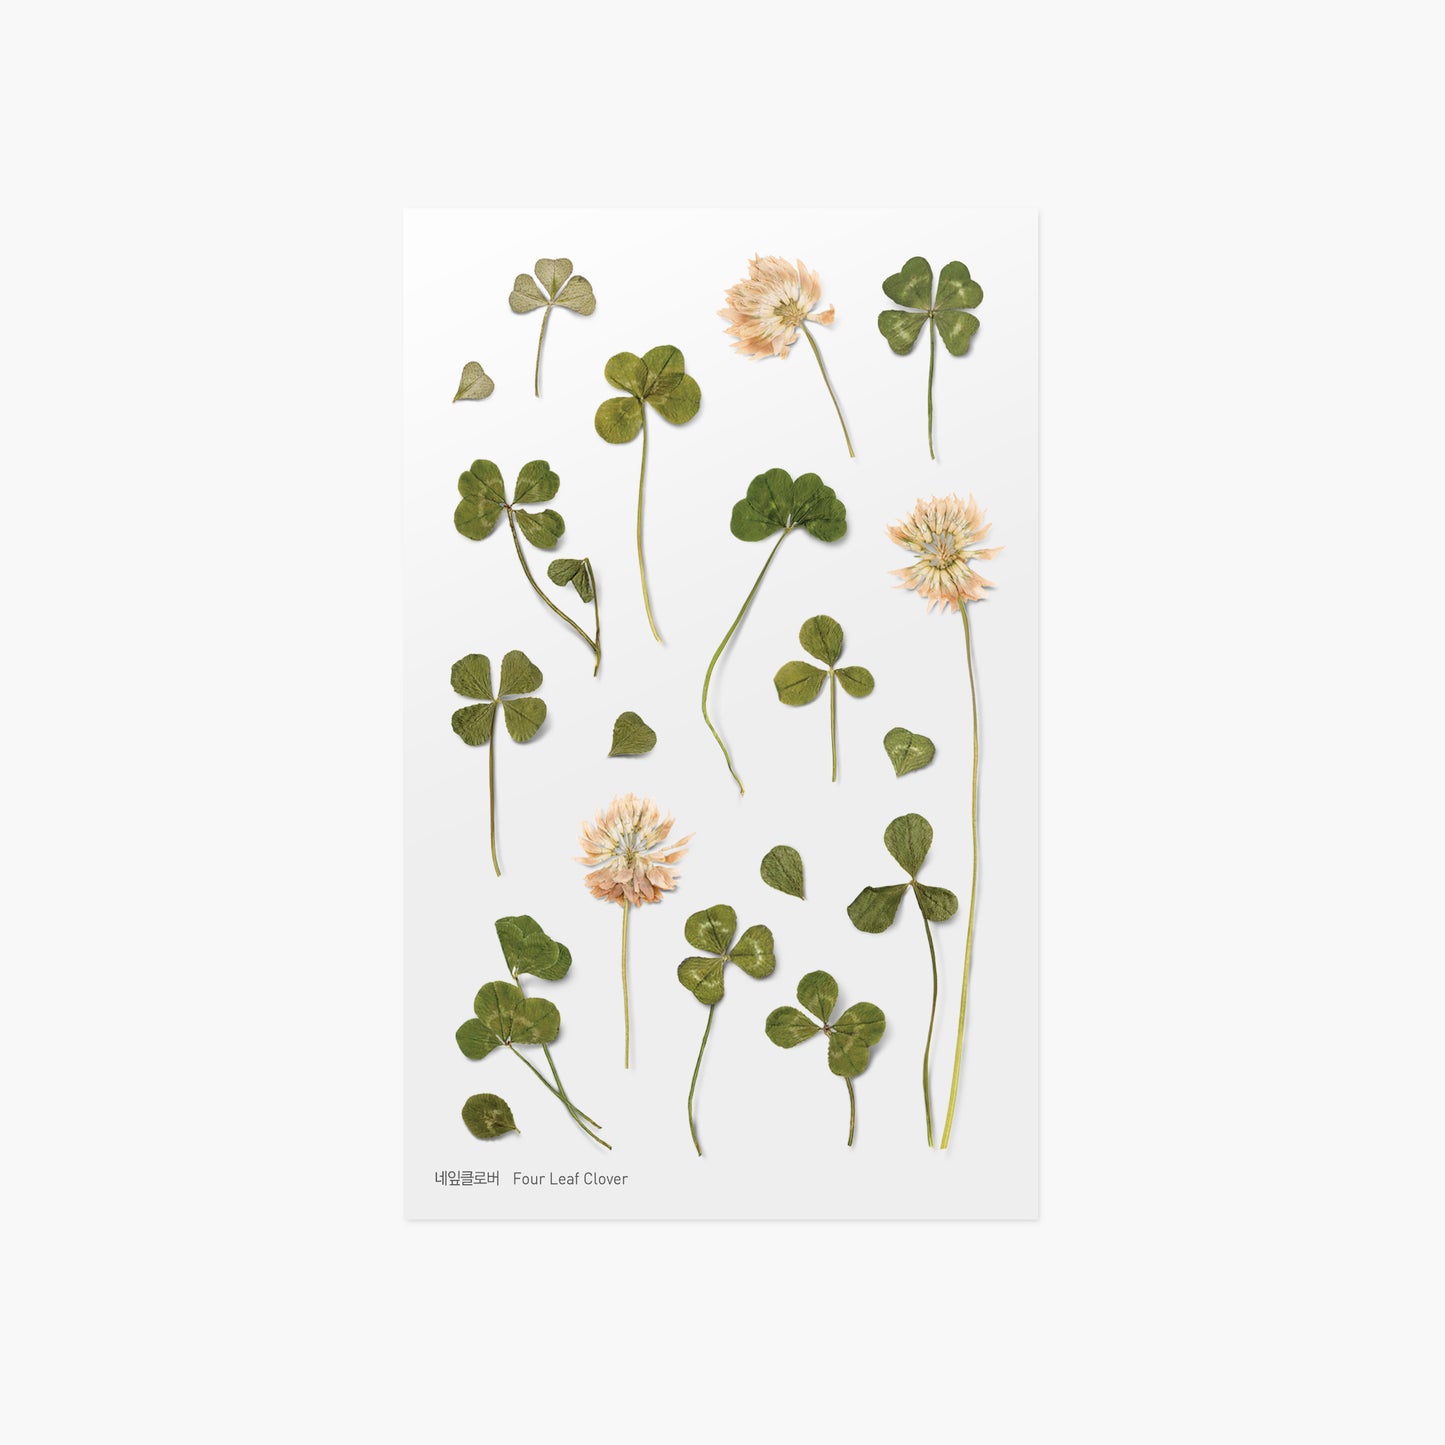 Appree Pressed Flower Sticker | Four Leaf Clover